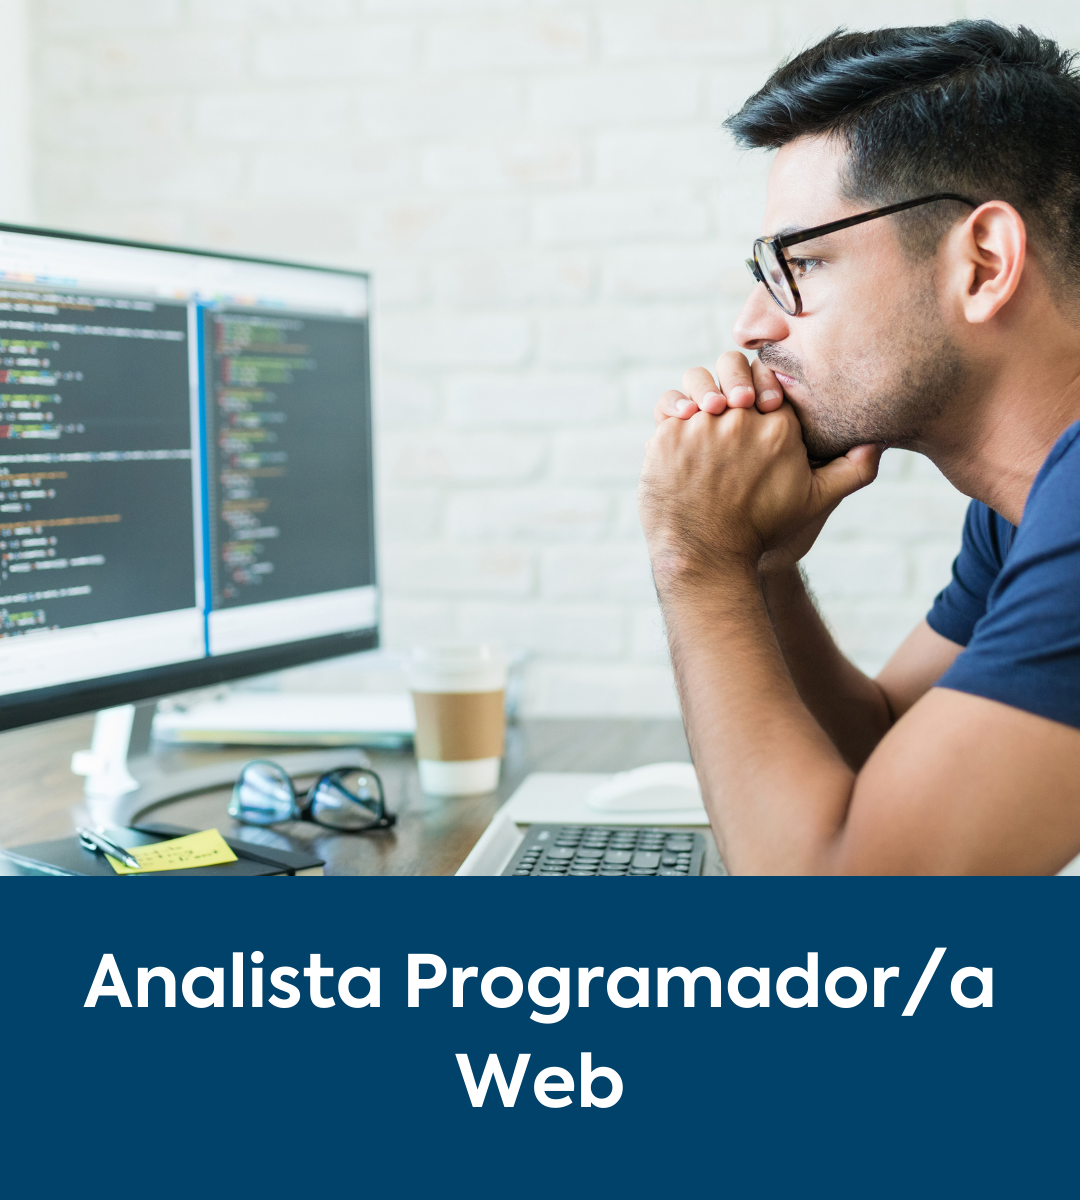 Analista Programador Web